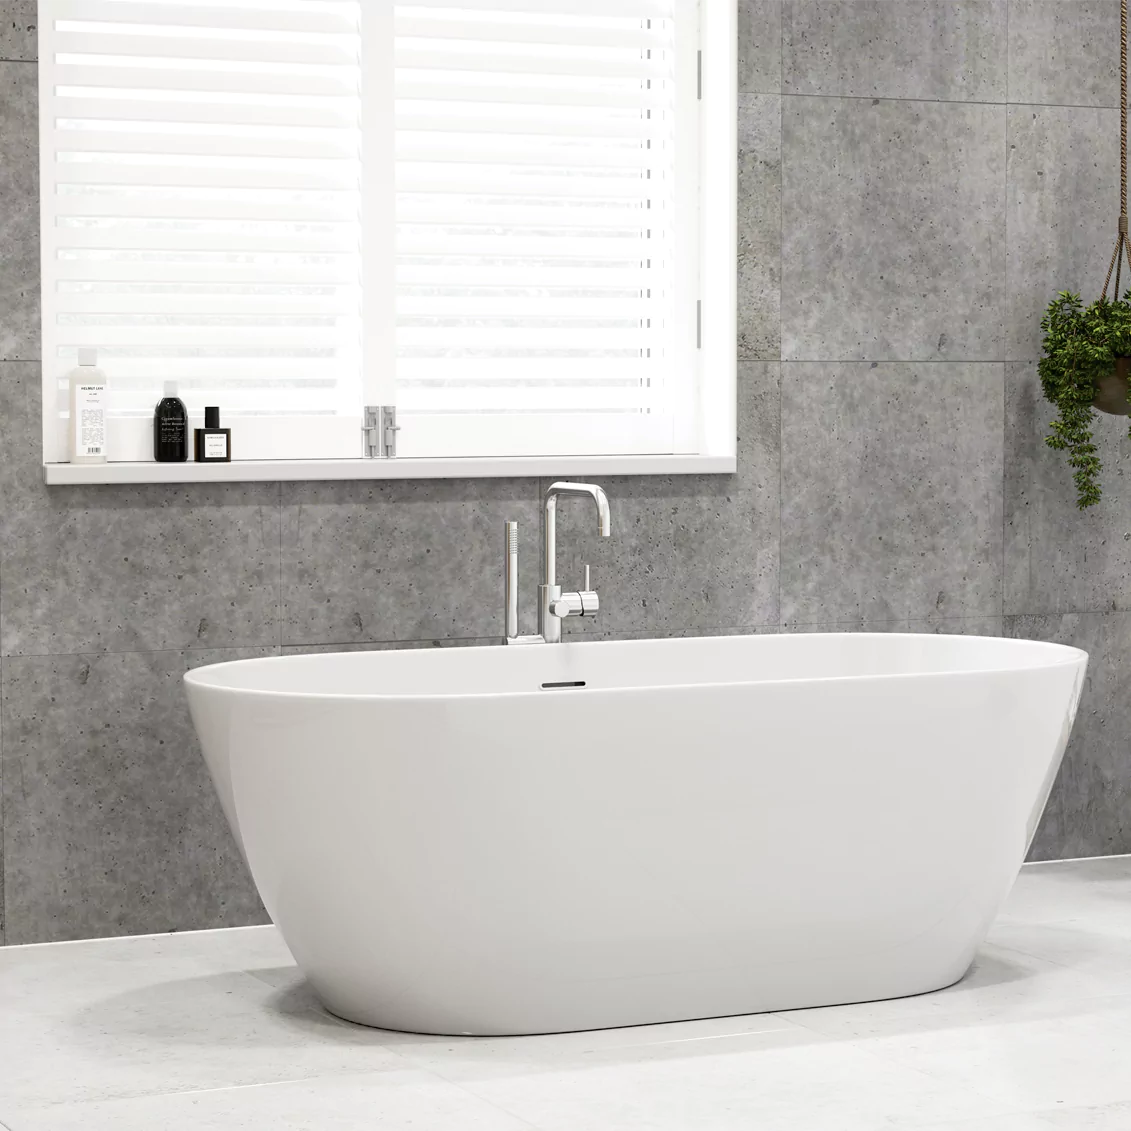 Tissino Angelo Freestanding Bath, White 1700x800mm, in a modern bathroom space